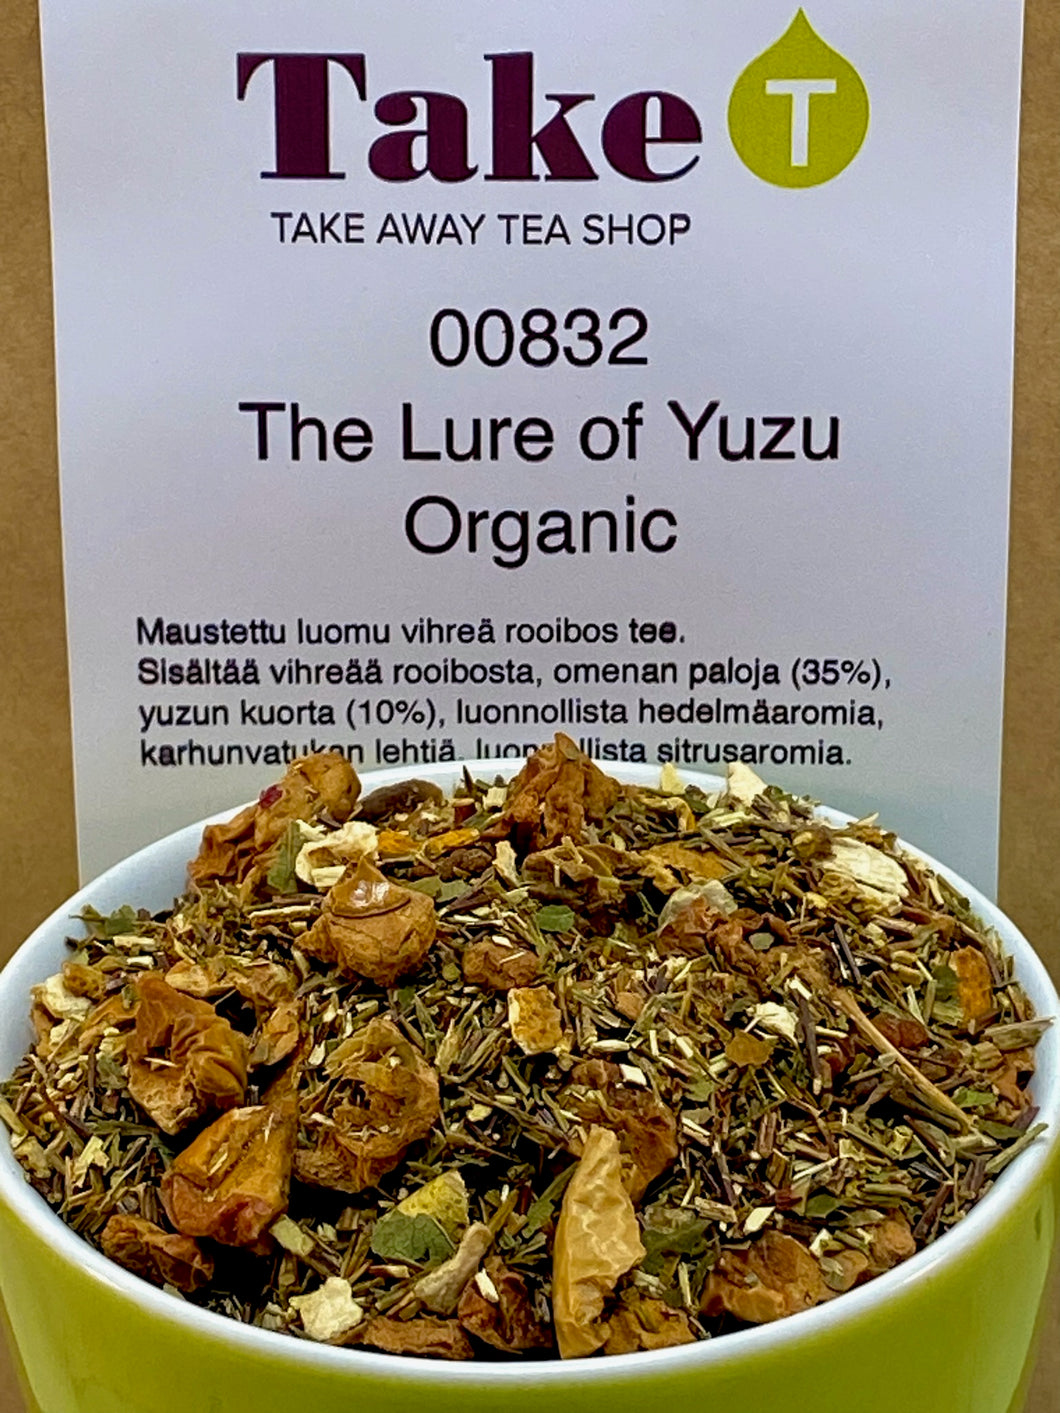 The Lure of Yuzu Organic